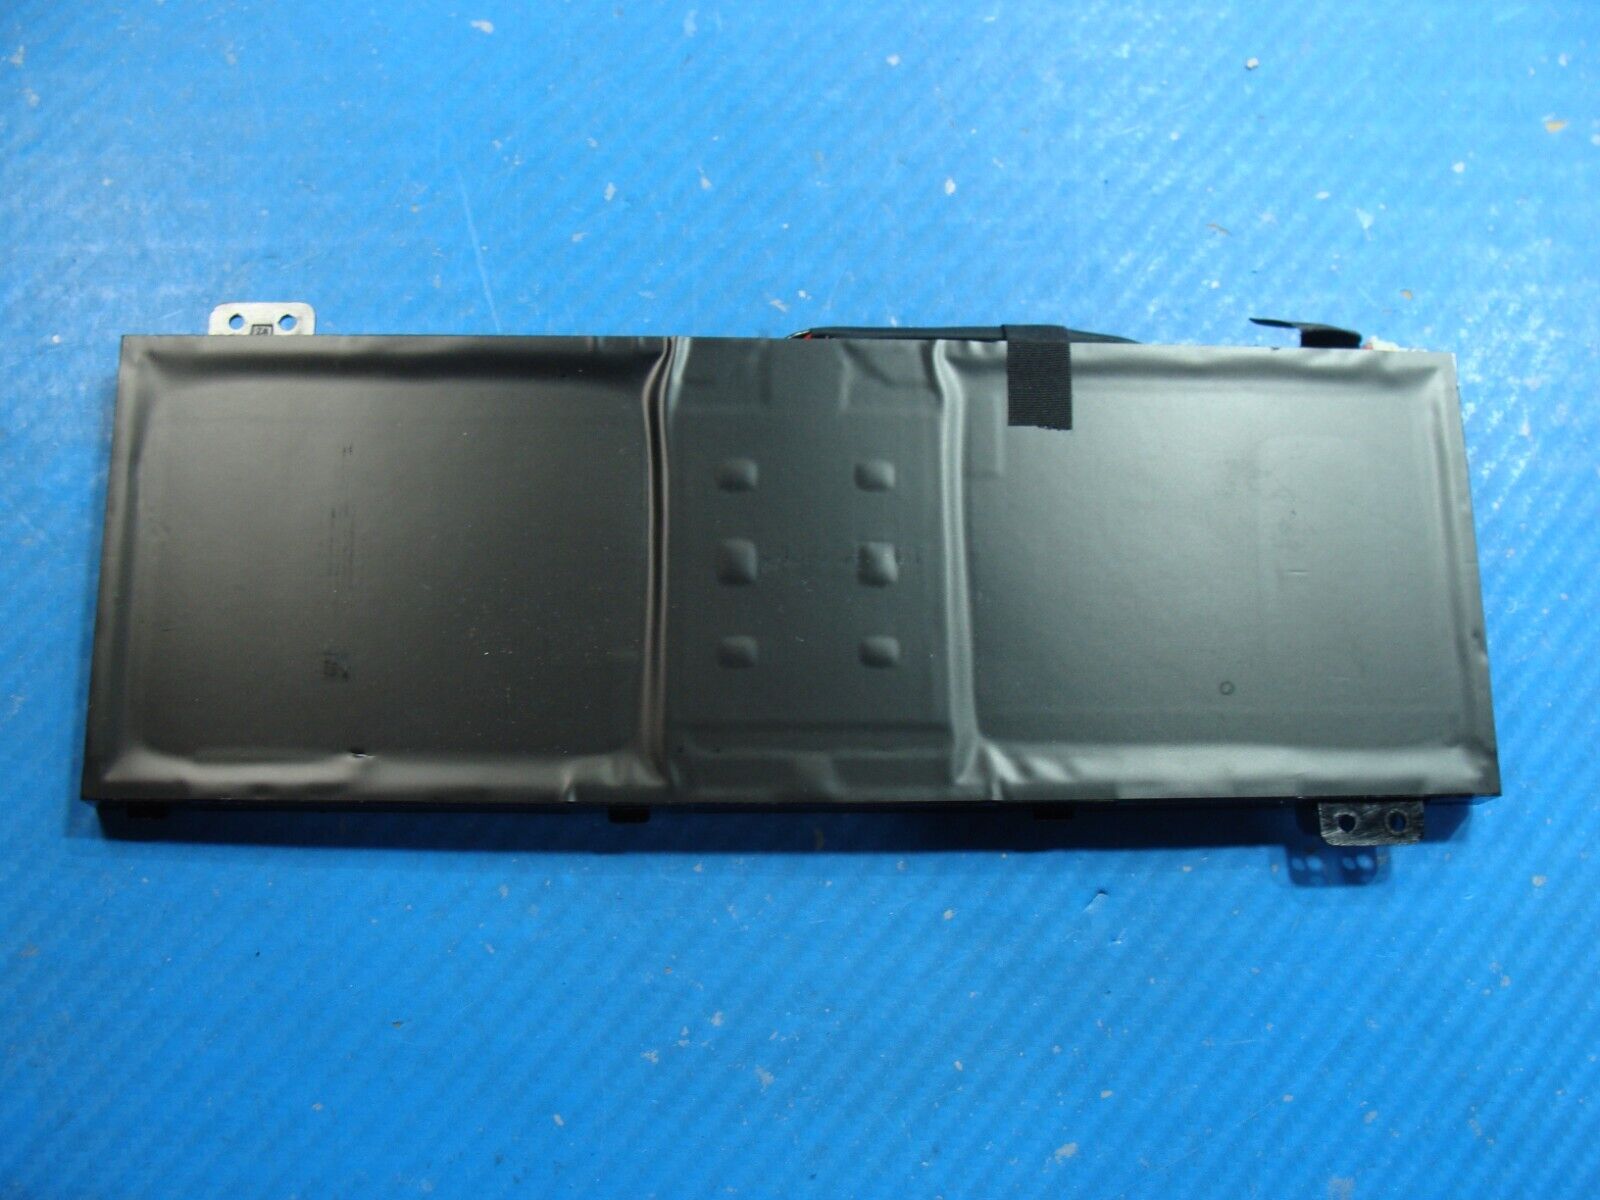 Acer Nitro 5 AN515-54-5812 15.6 Battery 15.4V 3574mAh 57.48Wh AP18E8M